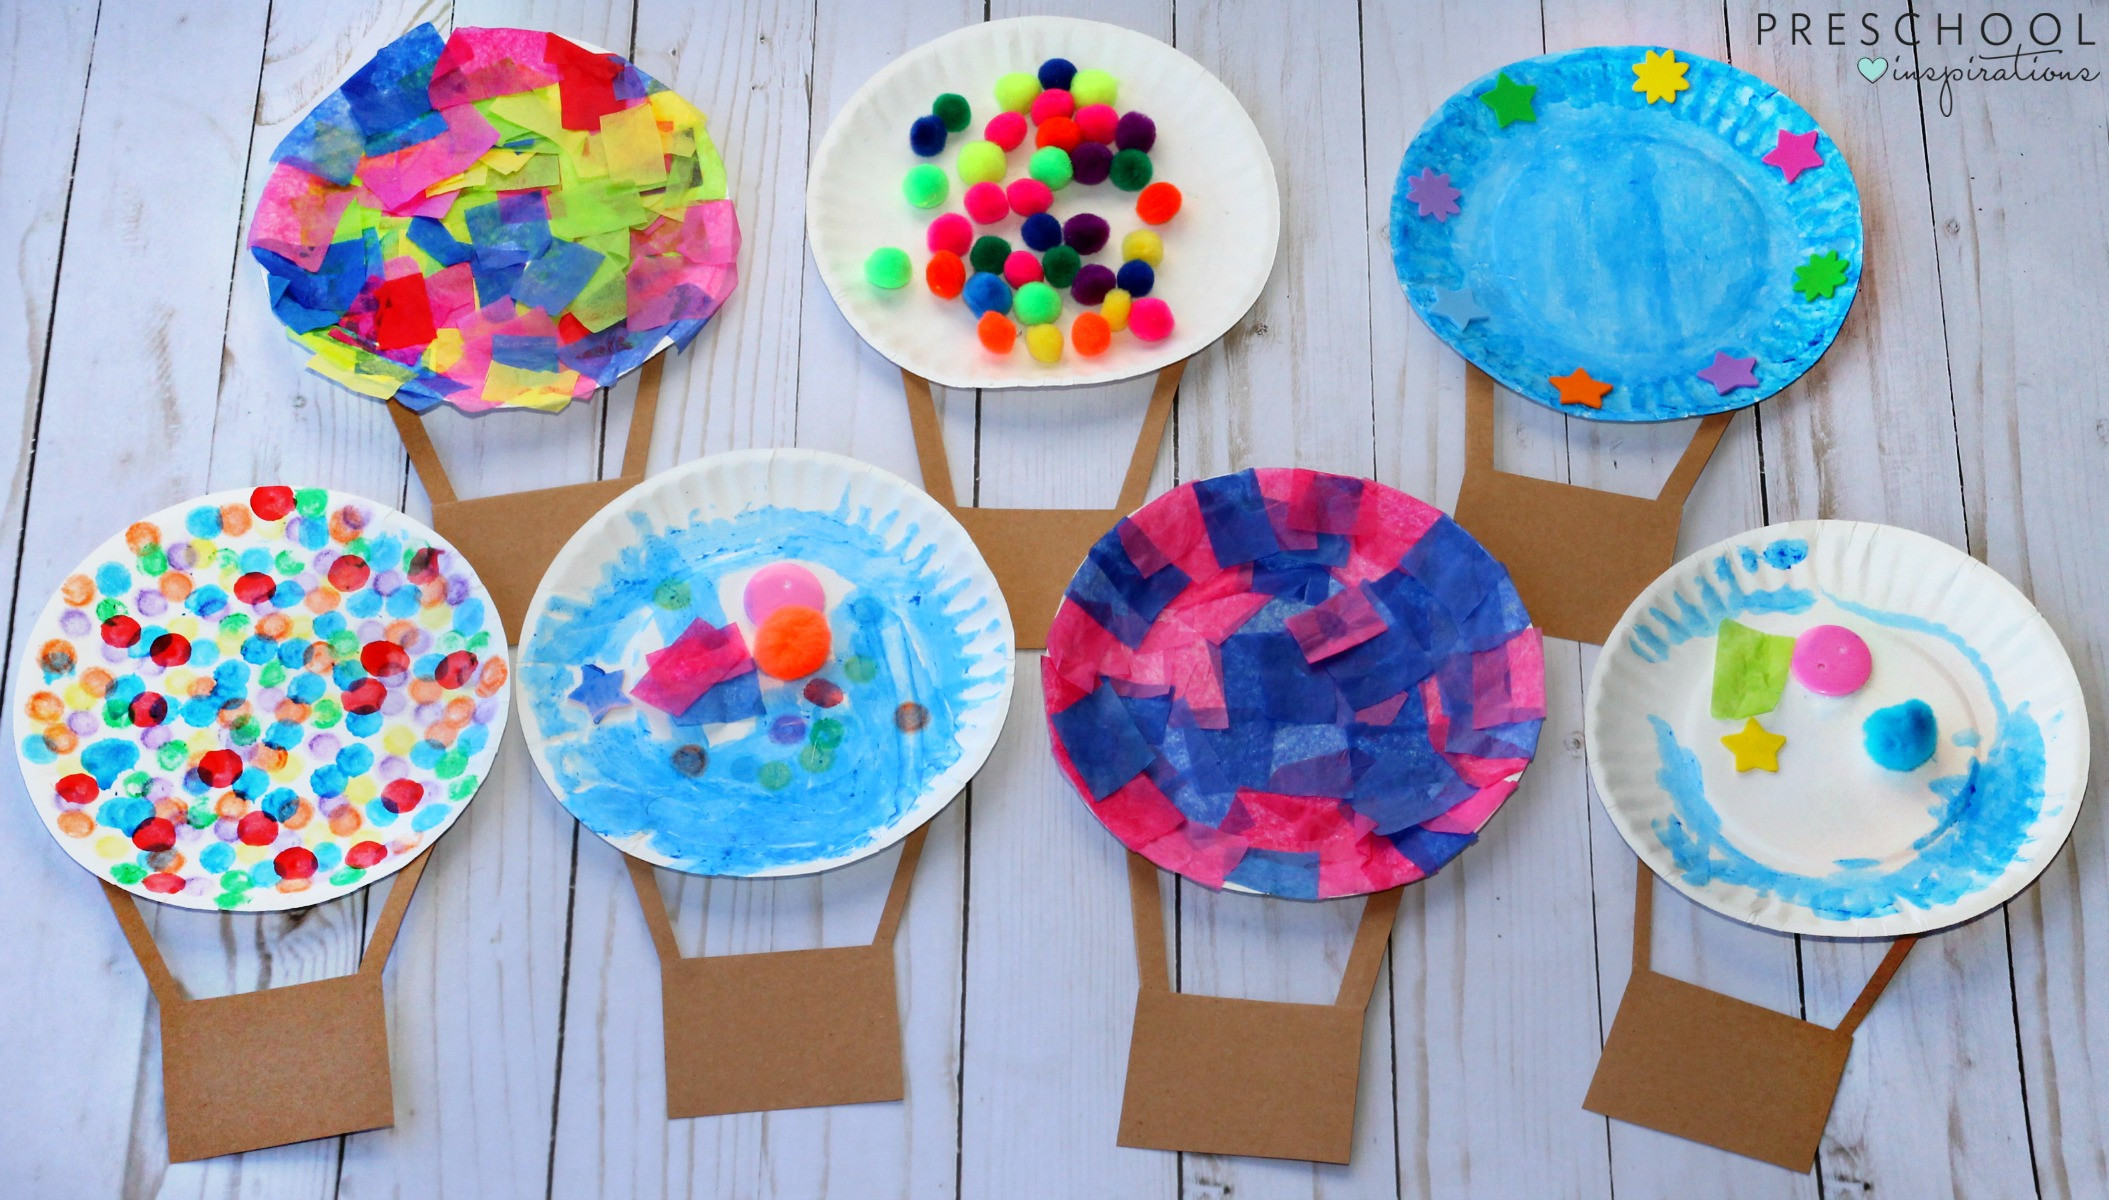 Best ideas about Art Projects For Kindergarten
. Save or Pin Hot Air Balloon Process Art Activity Preschool Inspirations Now.